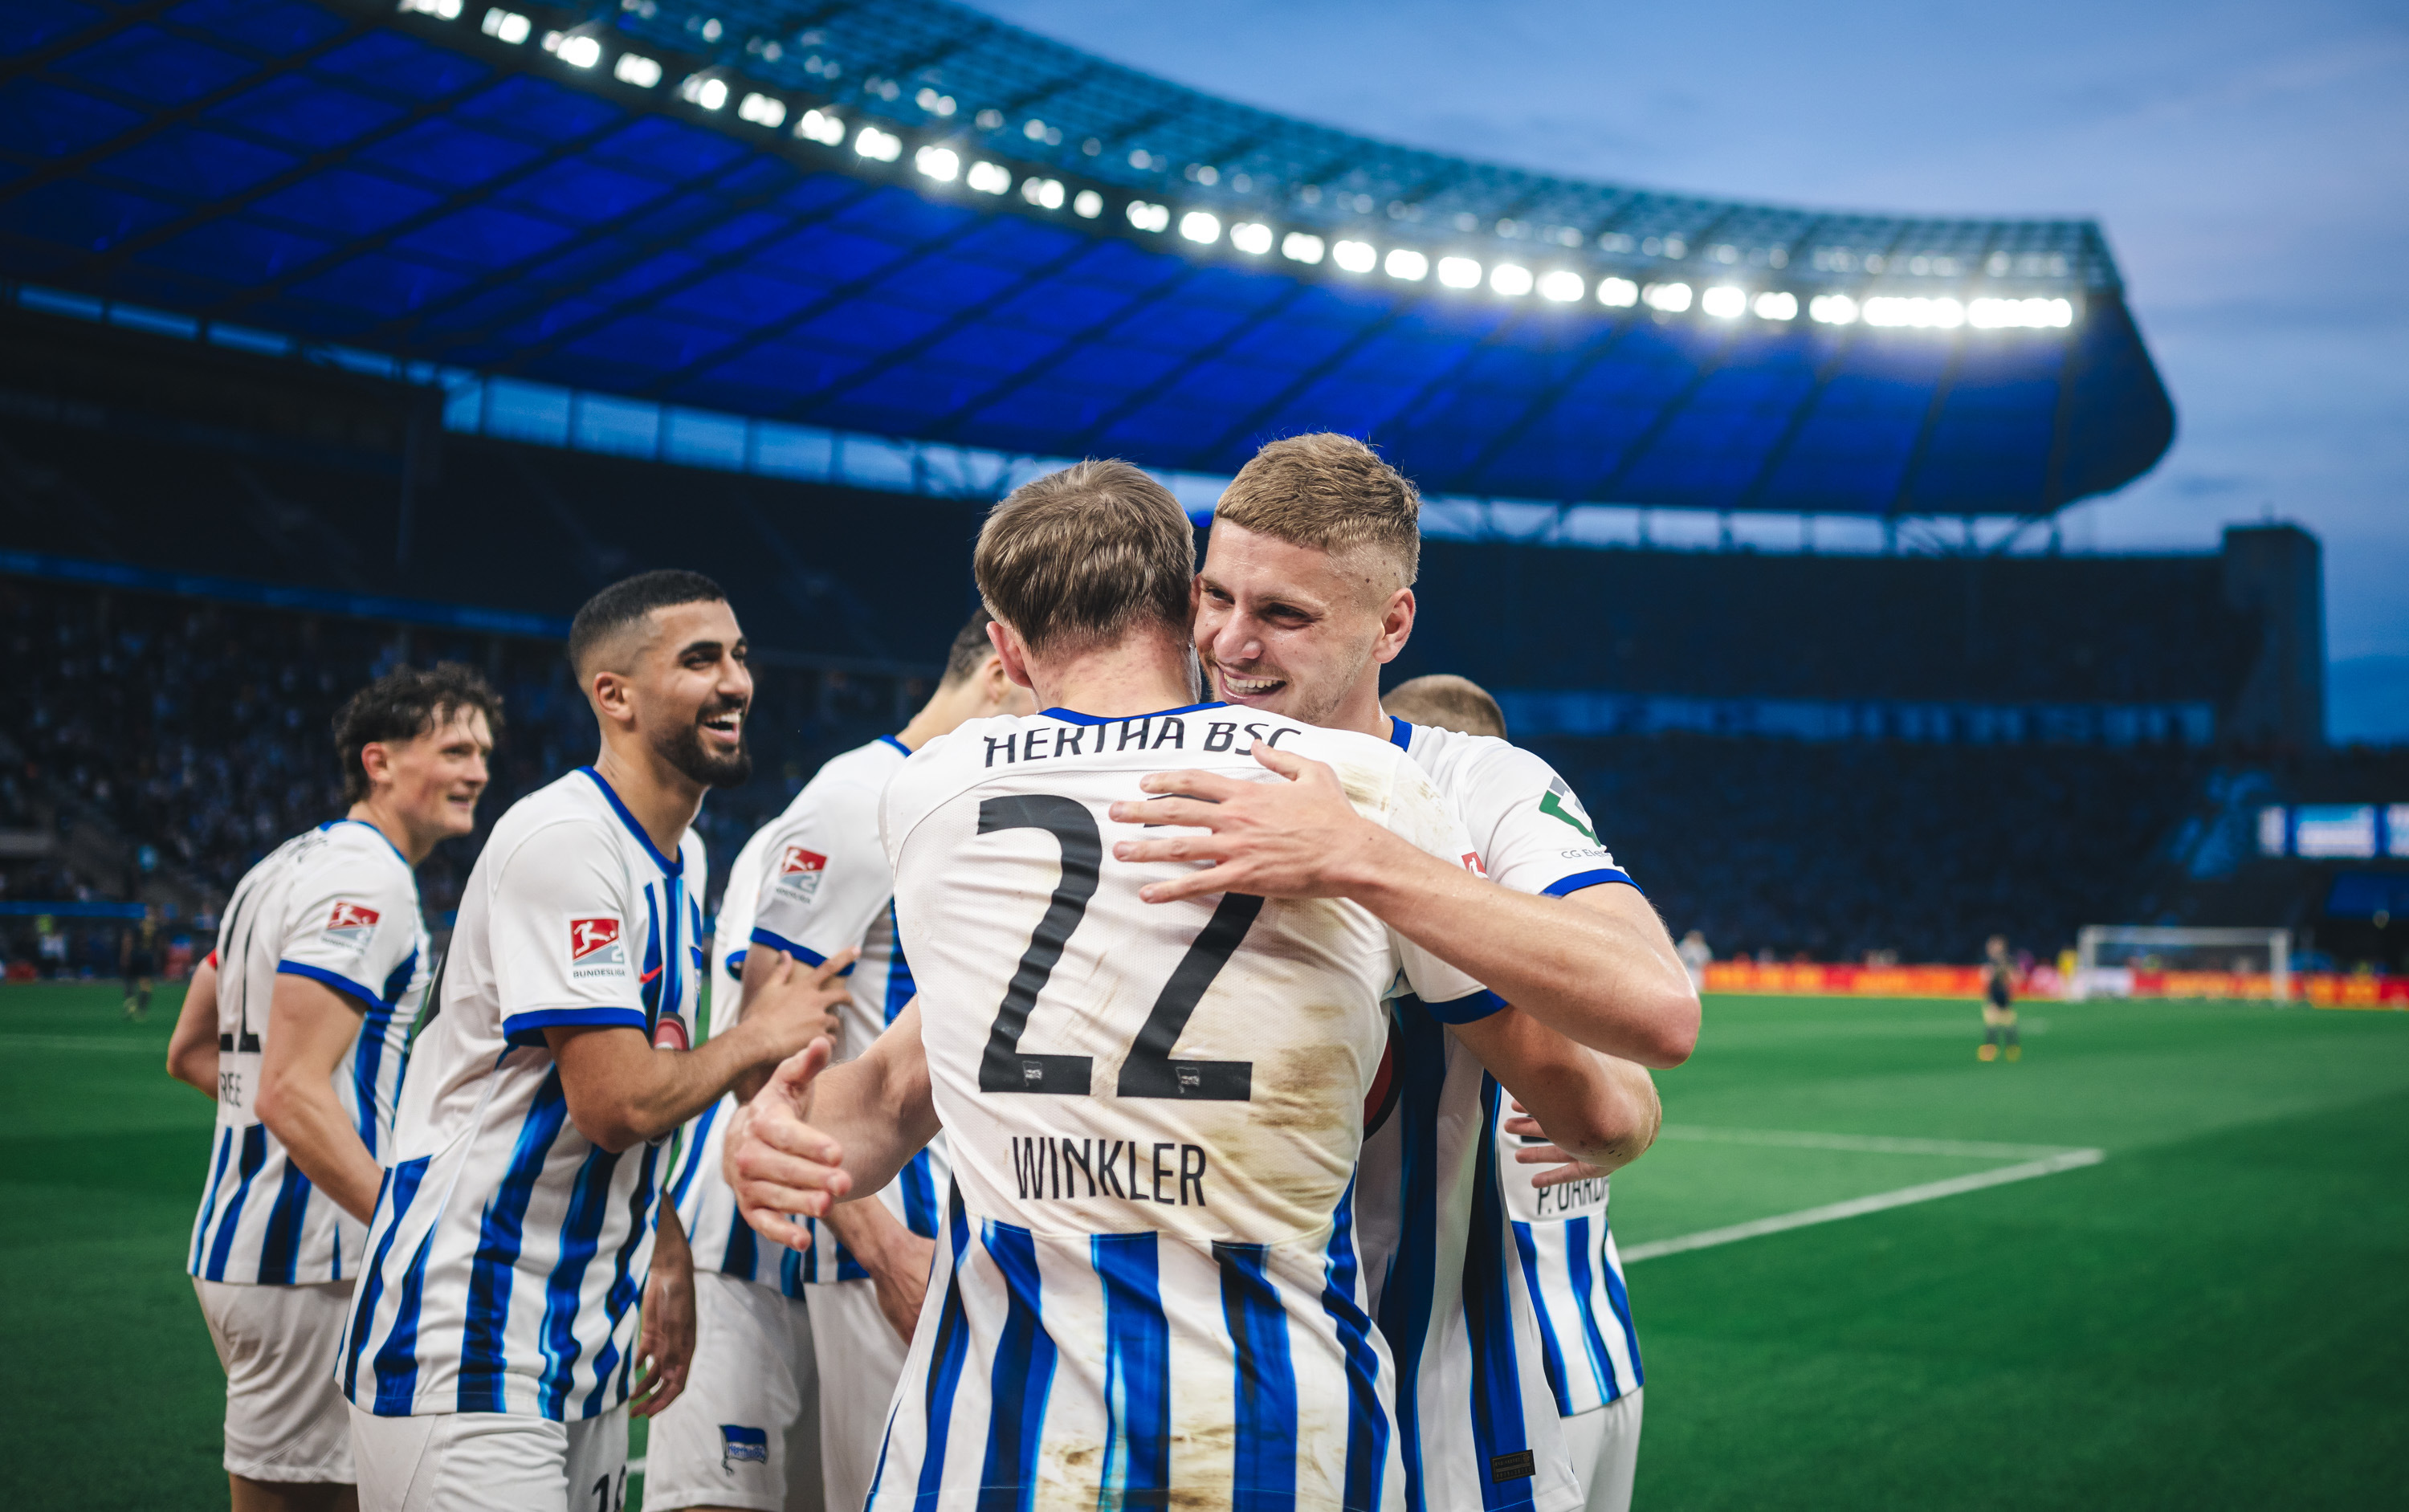 Marten Winkler and Palkó Dárdai celebrate after the third goal.